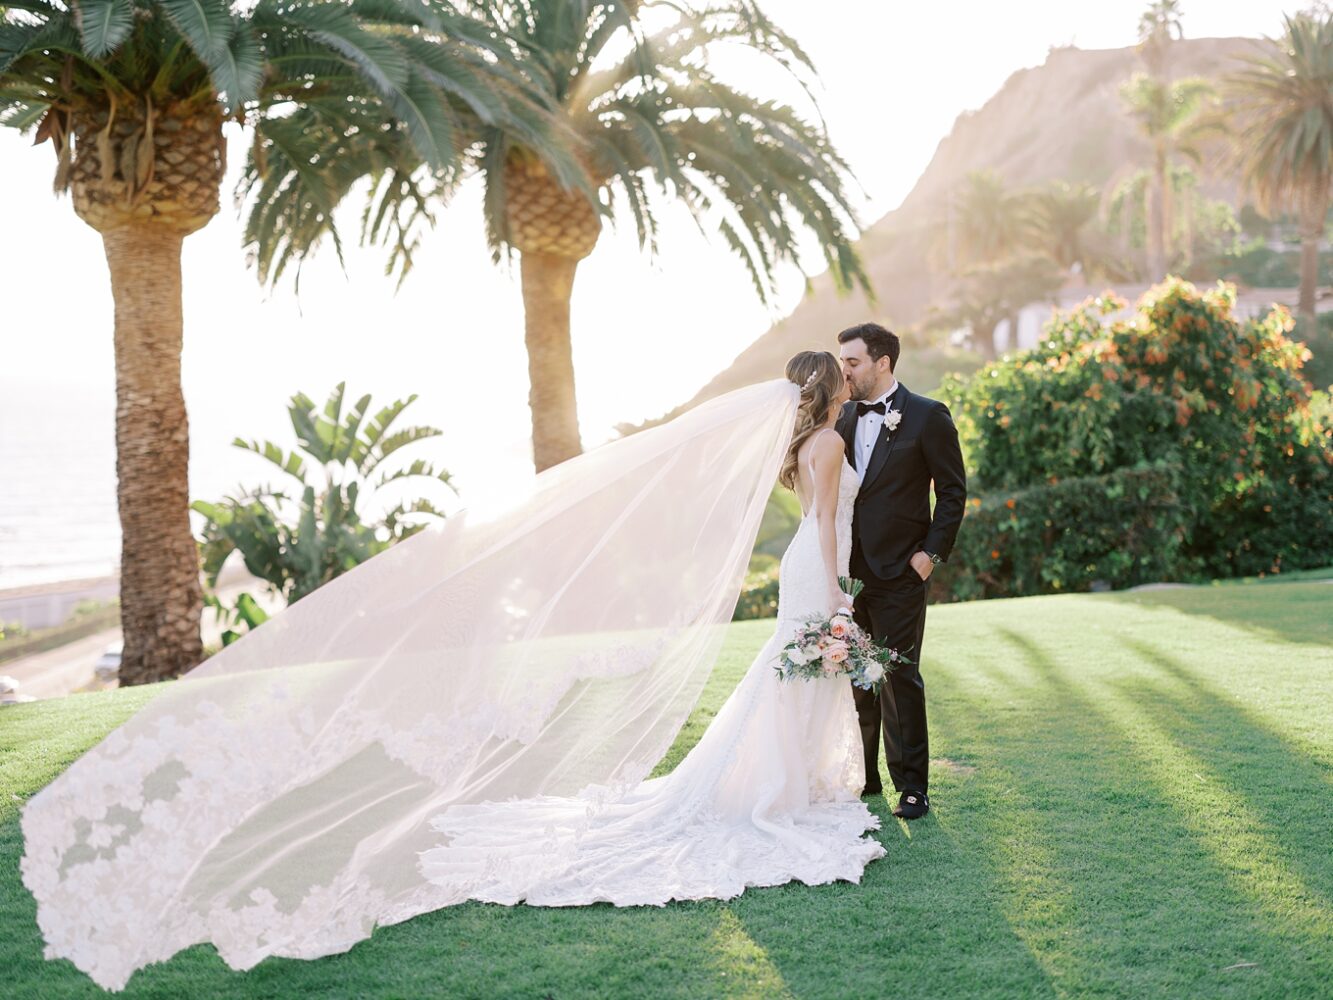 Madison Ellis Photography - Los Angeles Wedding Photographer